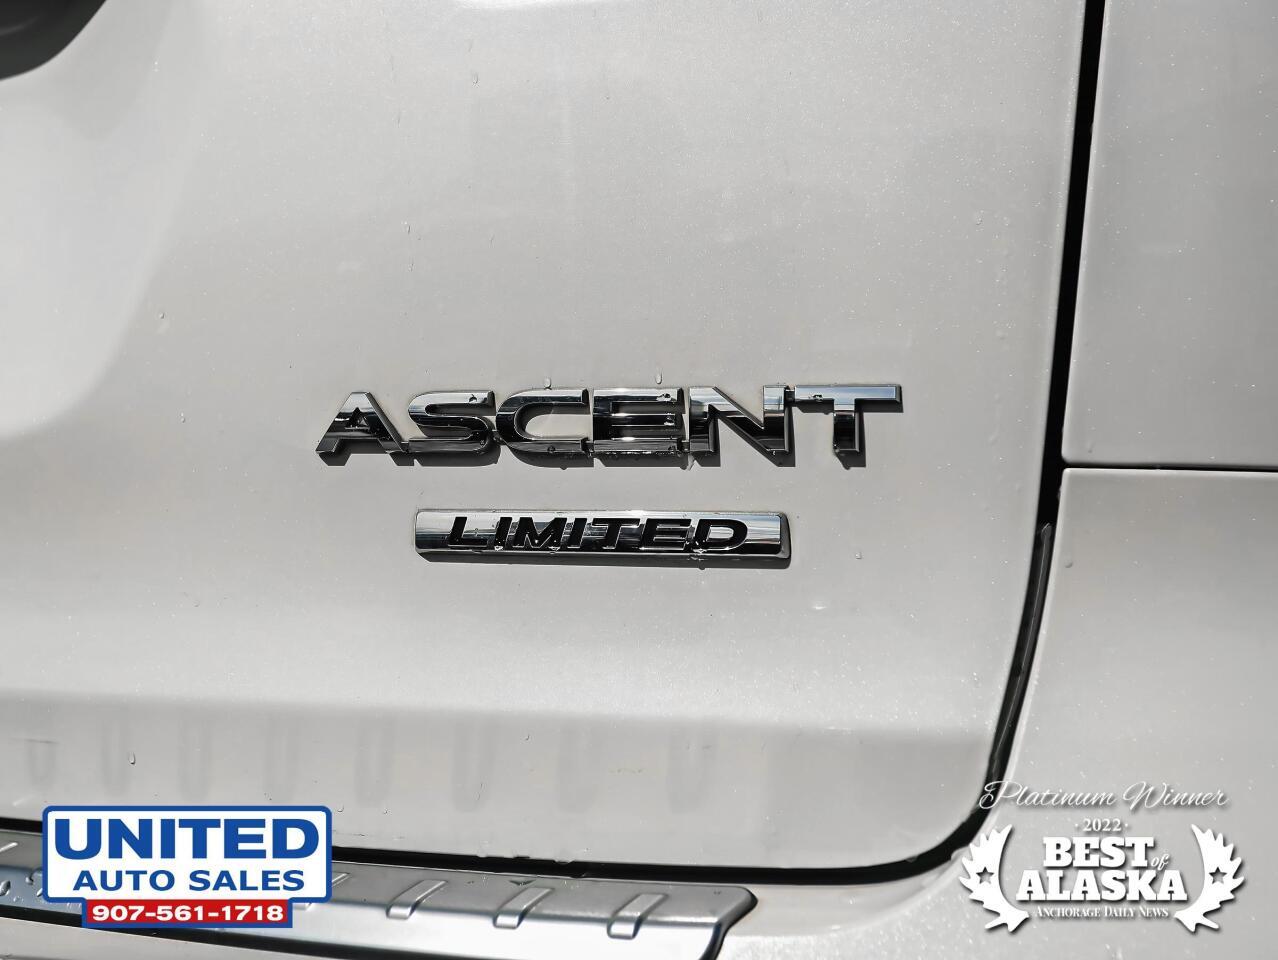 2019 Subaru Ascent Limited 7 Passenger AWD 4dr SUV 32